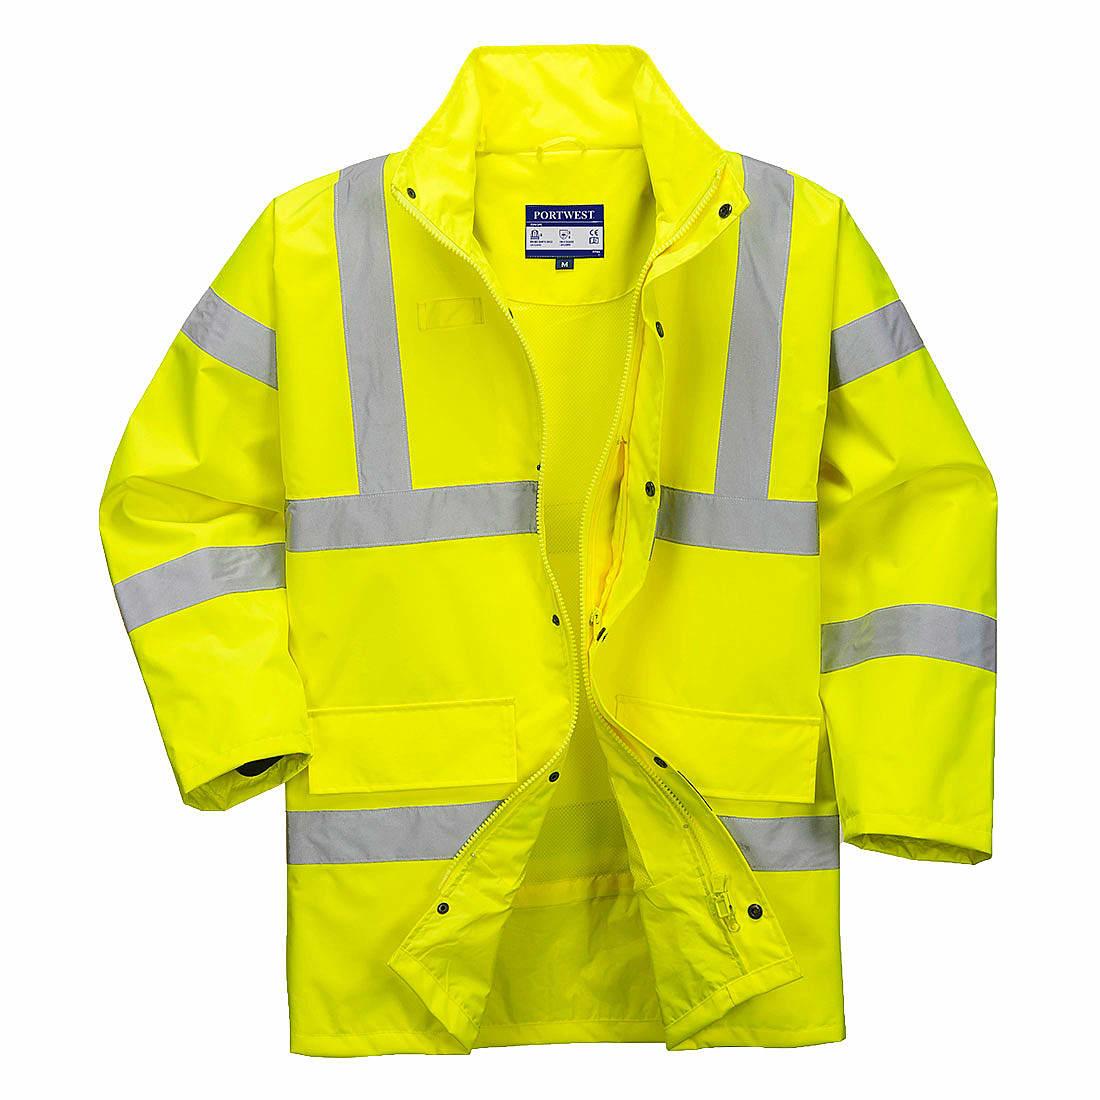 Portwest RT60 Hi-Viz Breathable Jacket in Yellow (Product Code: RT60)